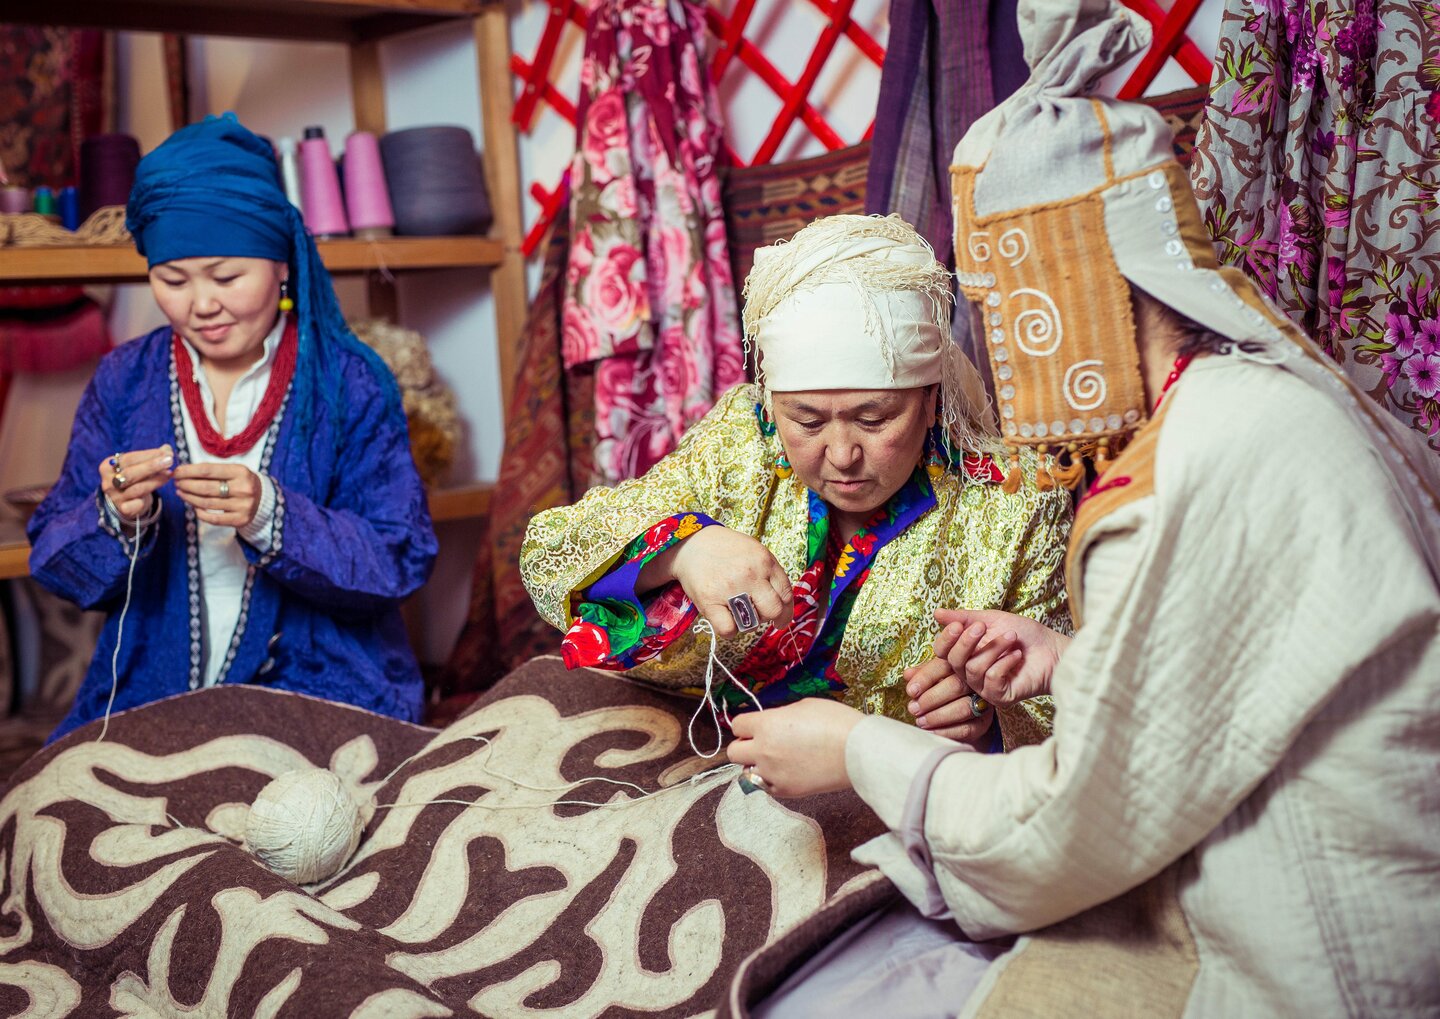 Women artisans in Alay and Chon-Alay | © Helvetas